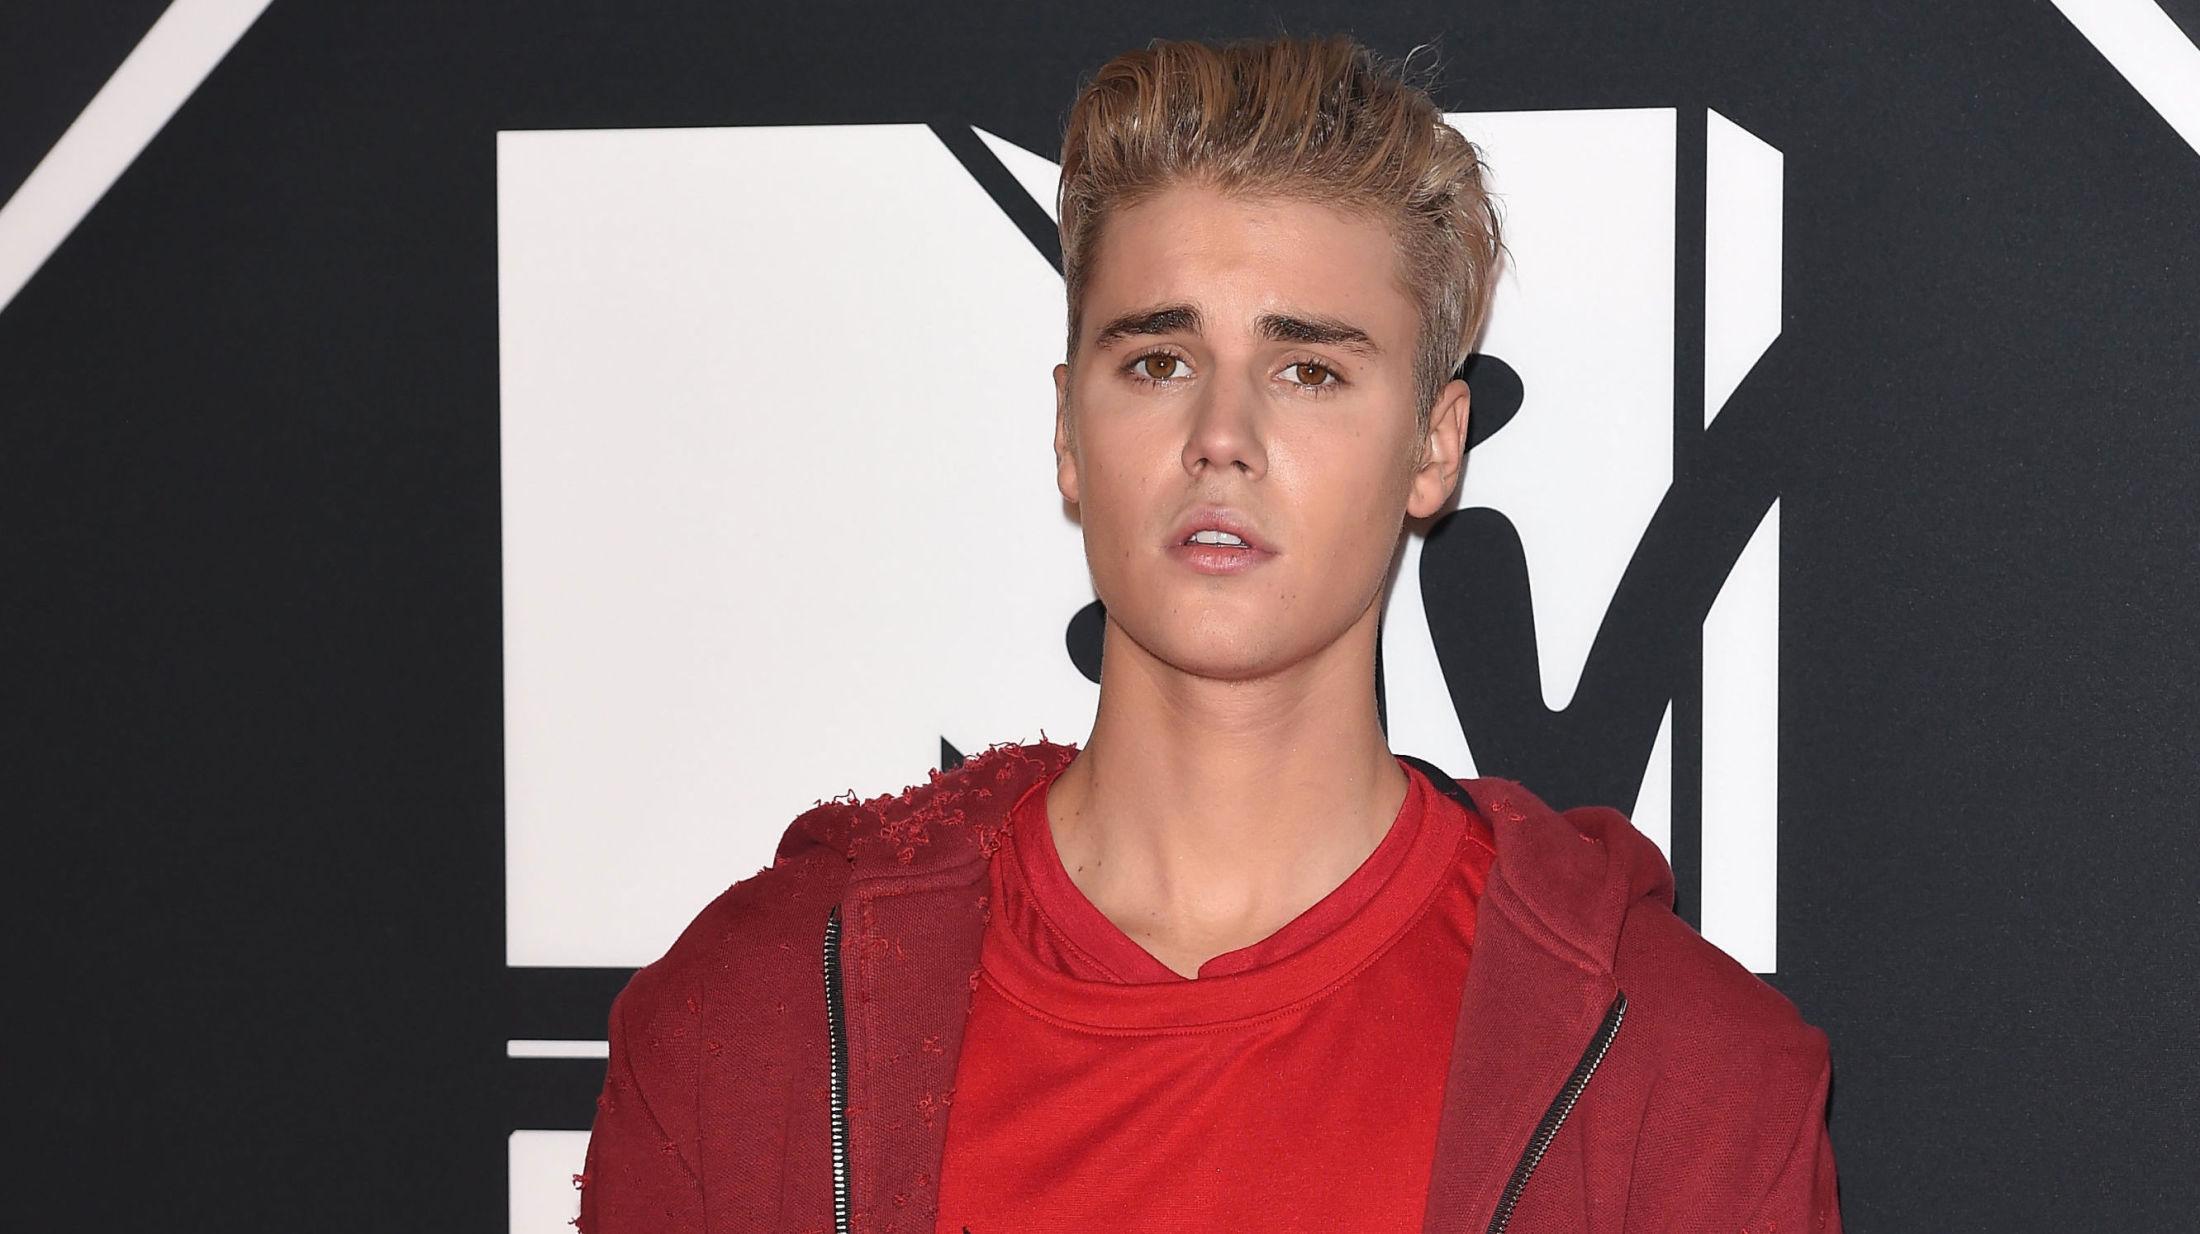 SÆREGEN STIL: Etter drøye åtte år i rampelyset har Bieber eksprimentert med flere stiler og ikke minst hårsveiser. Foto: Getty Images